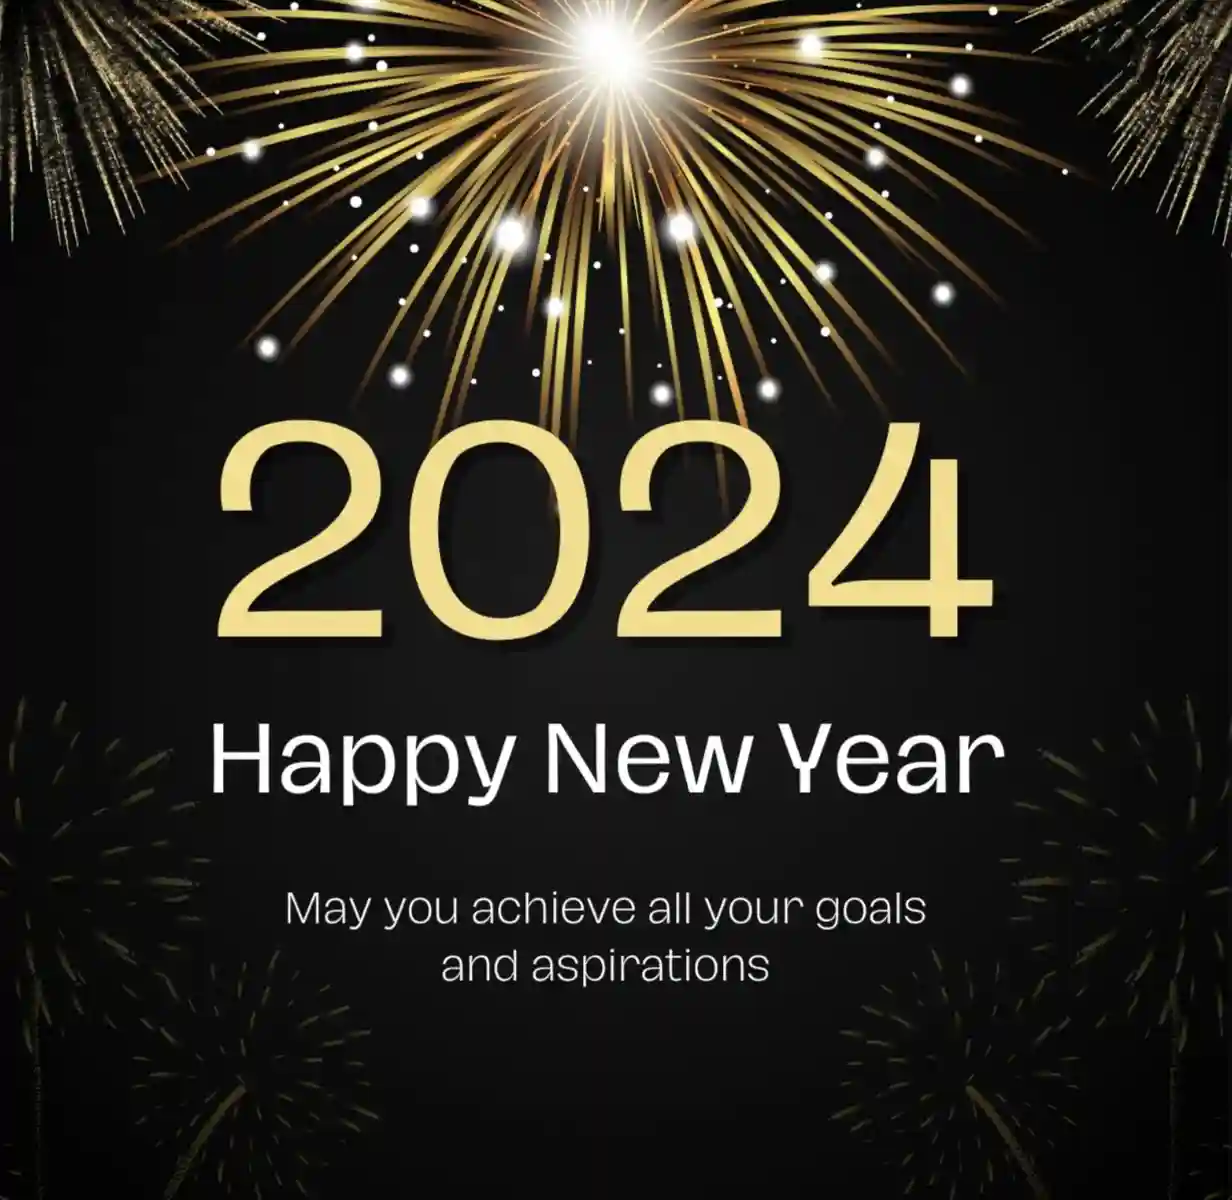 Happy New Year 2024 Marathi Wishes, Shayari, Quotes, Caption - नववर्षाच्या हार्दिक शुभेच्छा, बॅनर, स्टेट्स